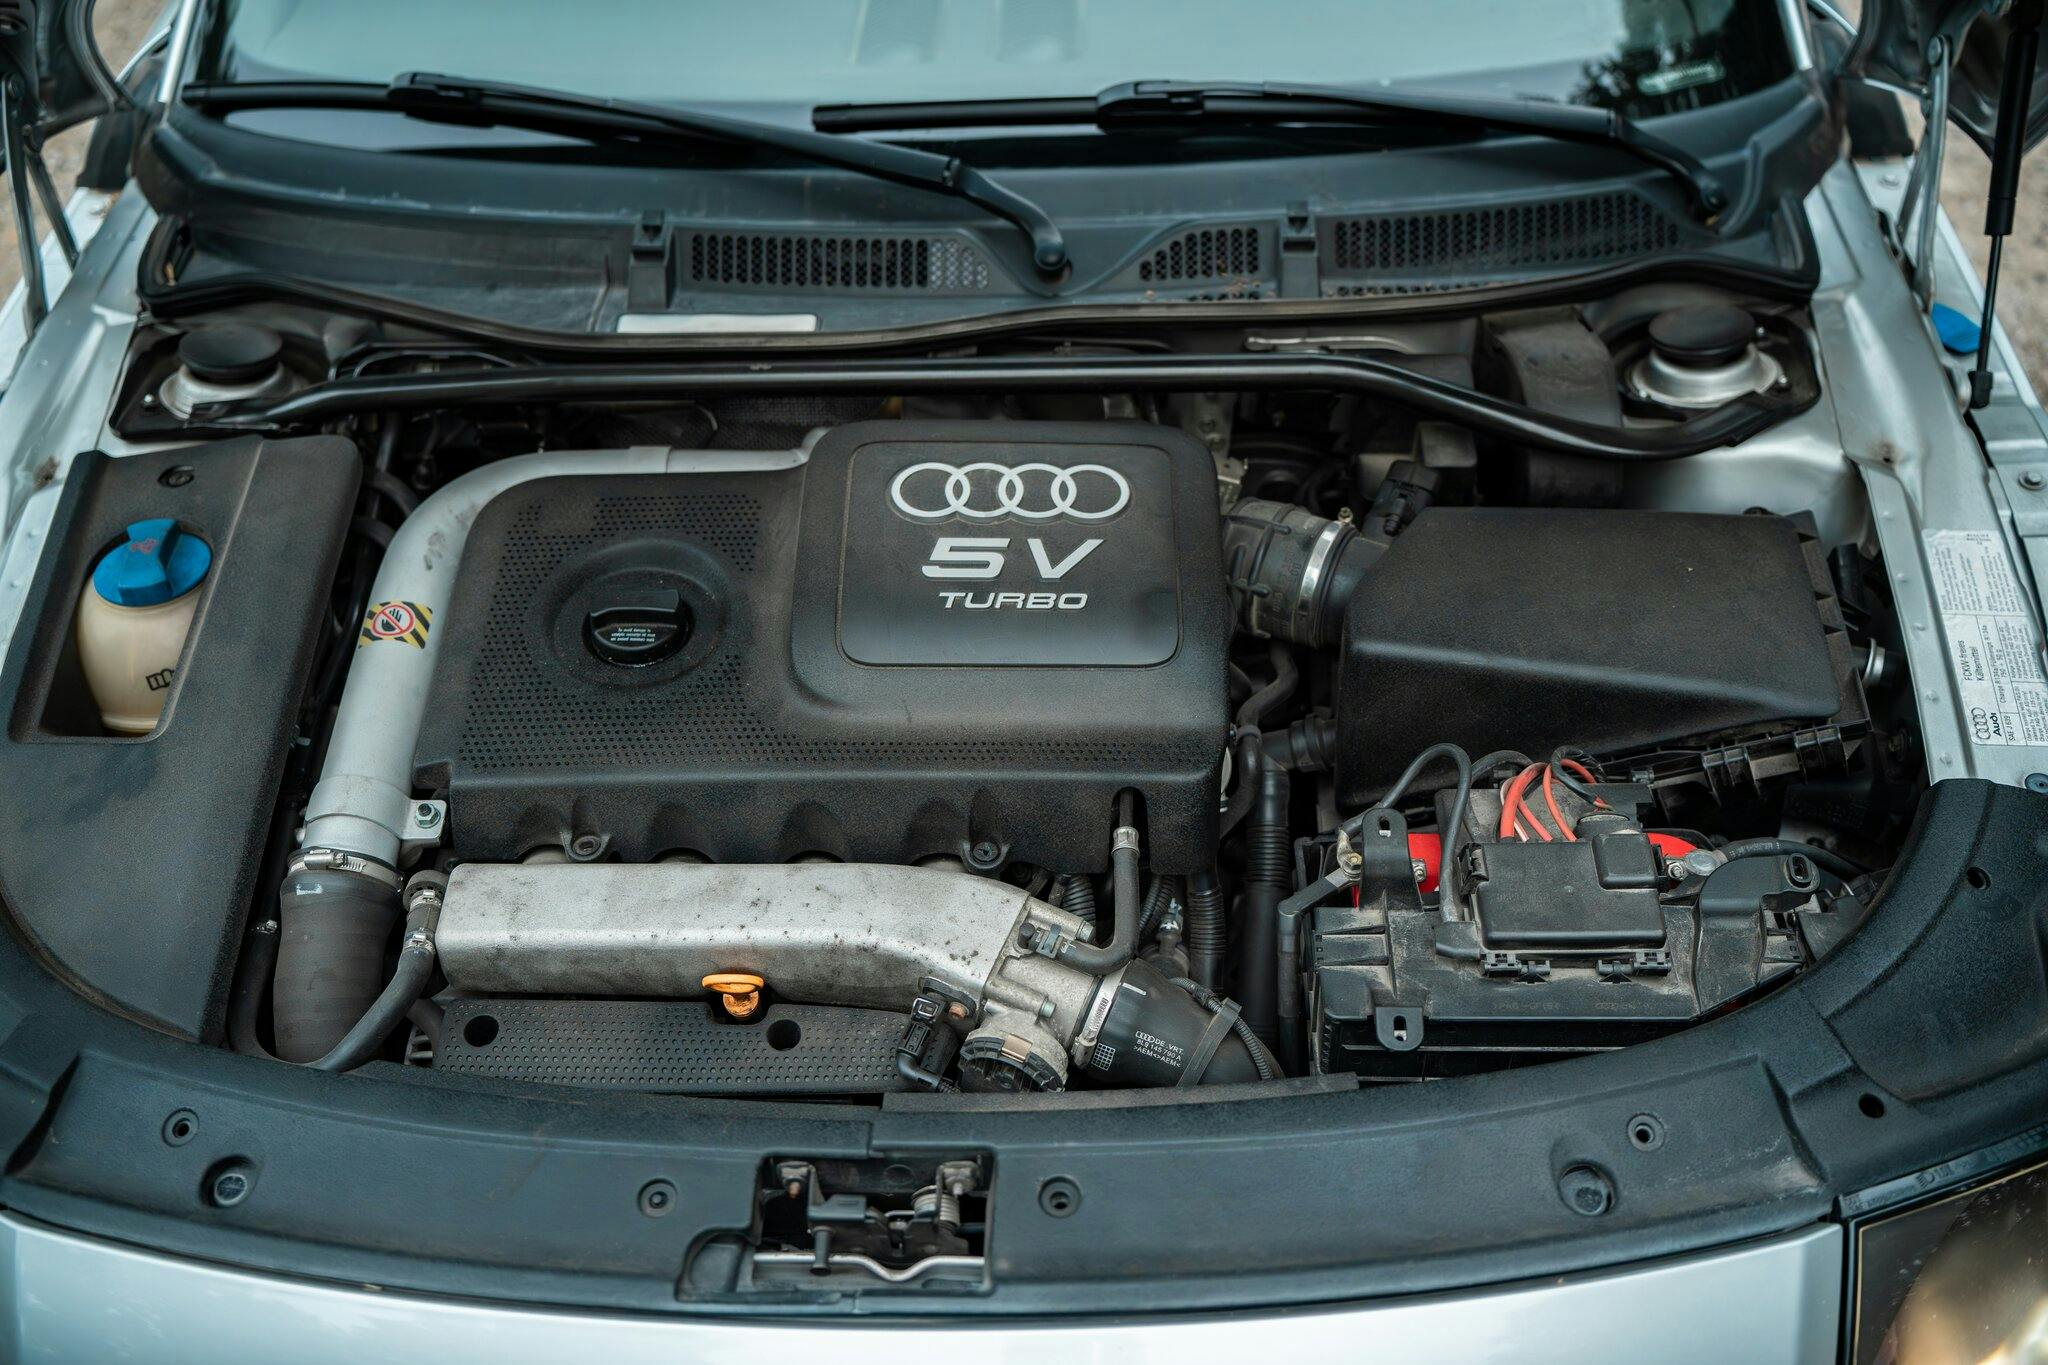 Audi TT MK1 Roadster engine bay